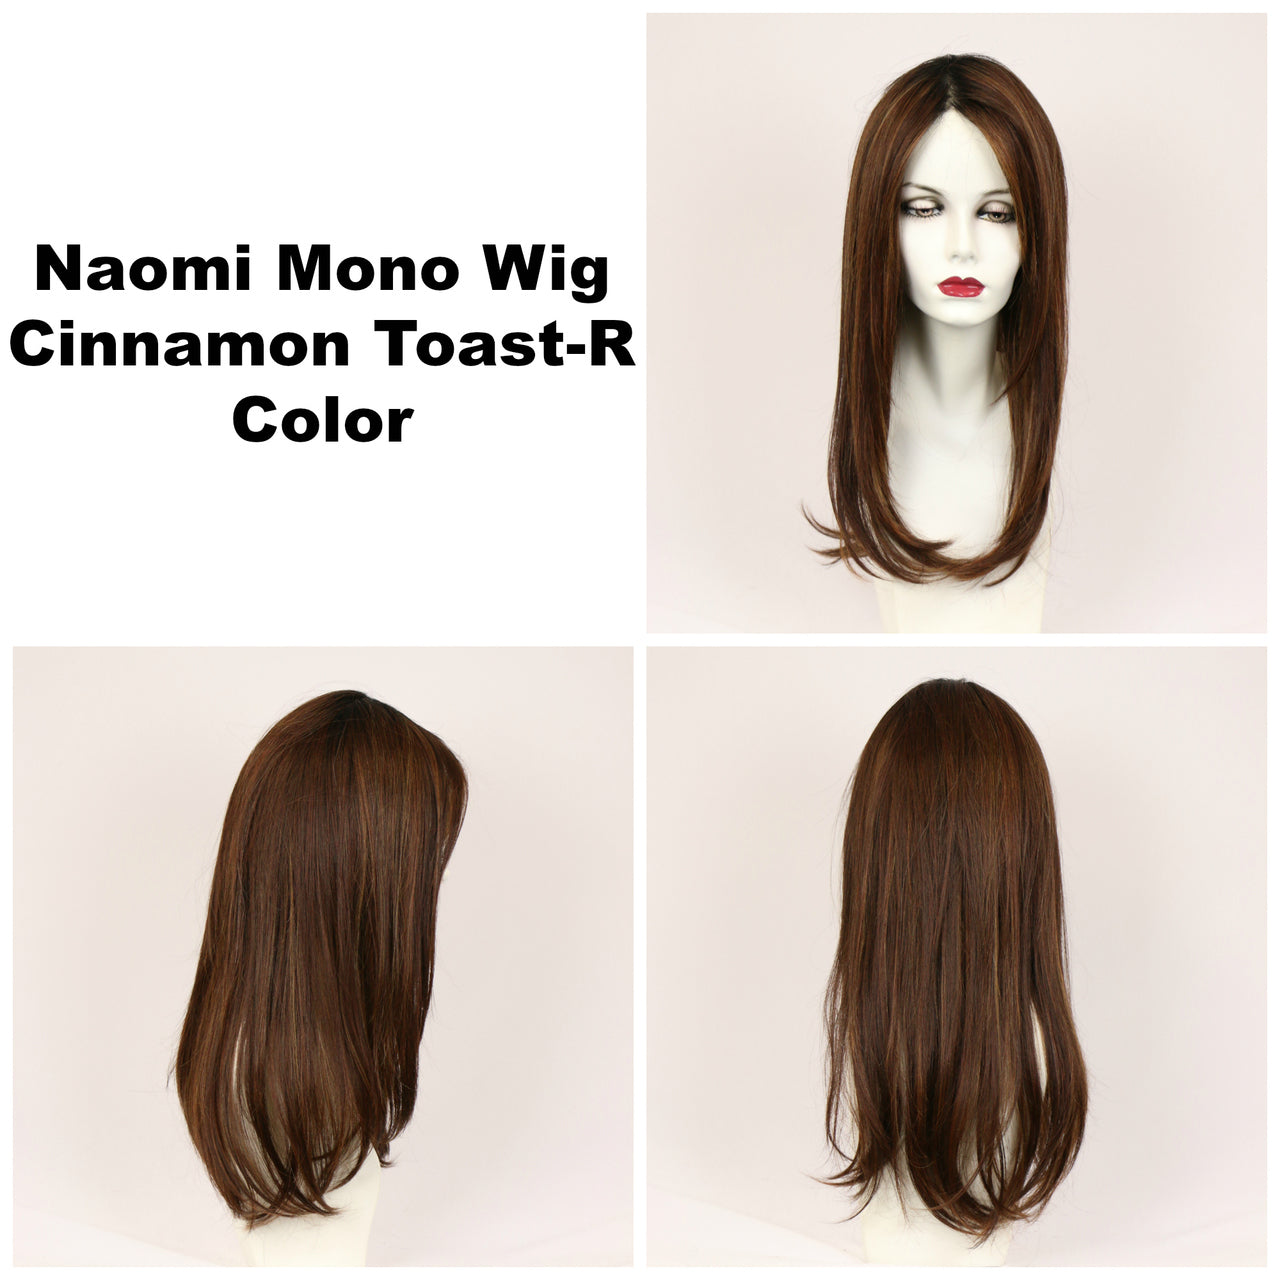 Cinnamon Toast-R / Naomi Monofilament w/ Roots / Long Wig